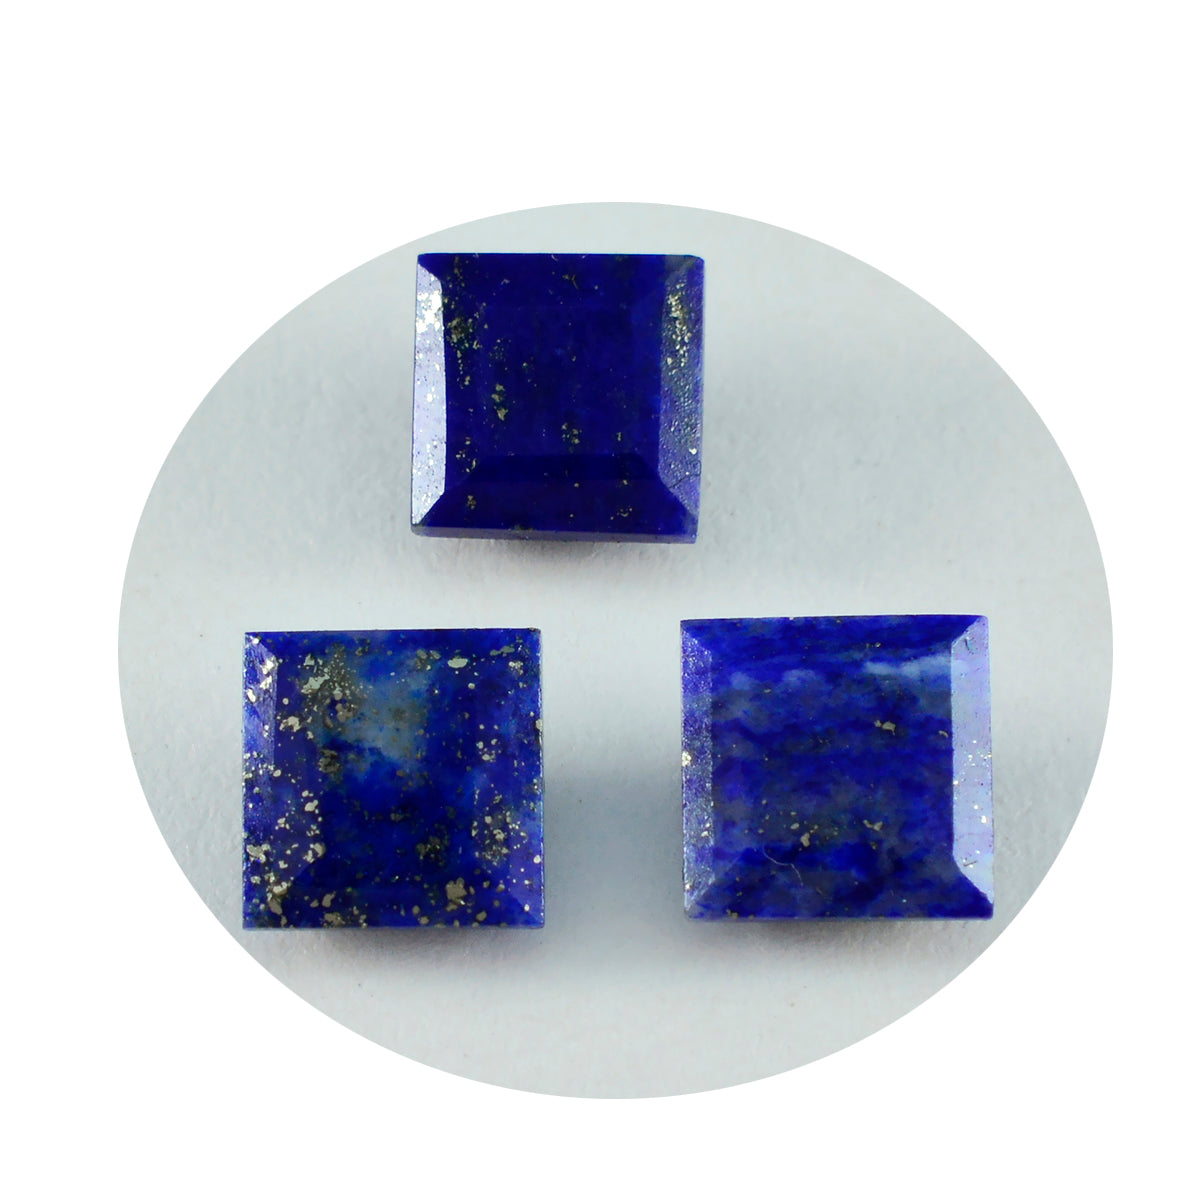 Riyogems 1PC Genuine Blue Lapis Lazuli Faceted 10x10 mm Square Shape lovely Quality Loose Gem